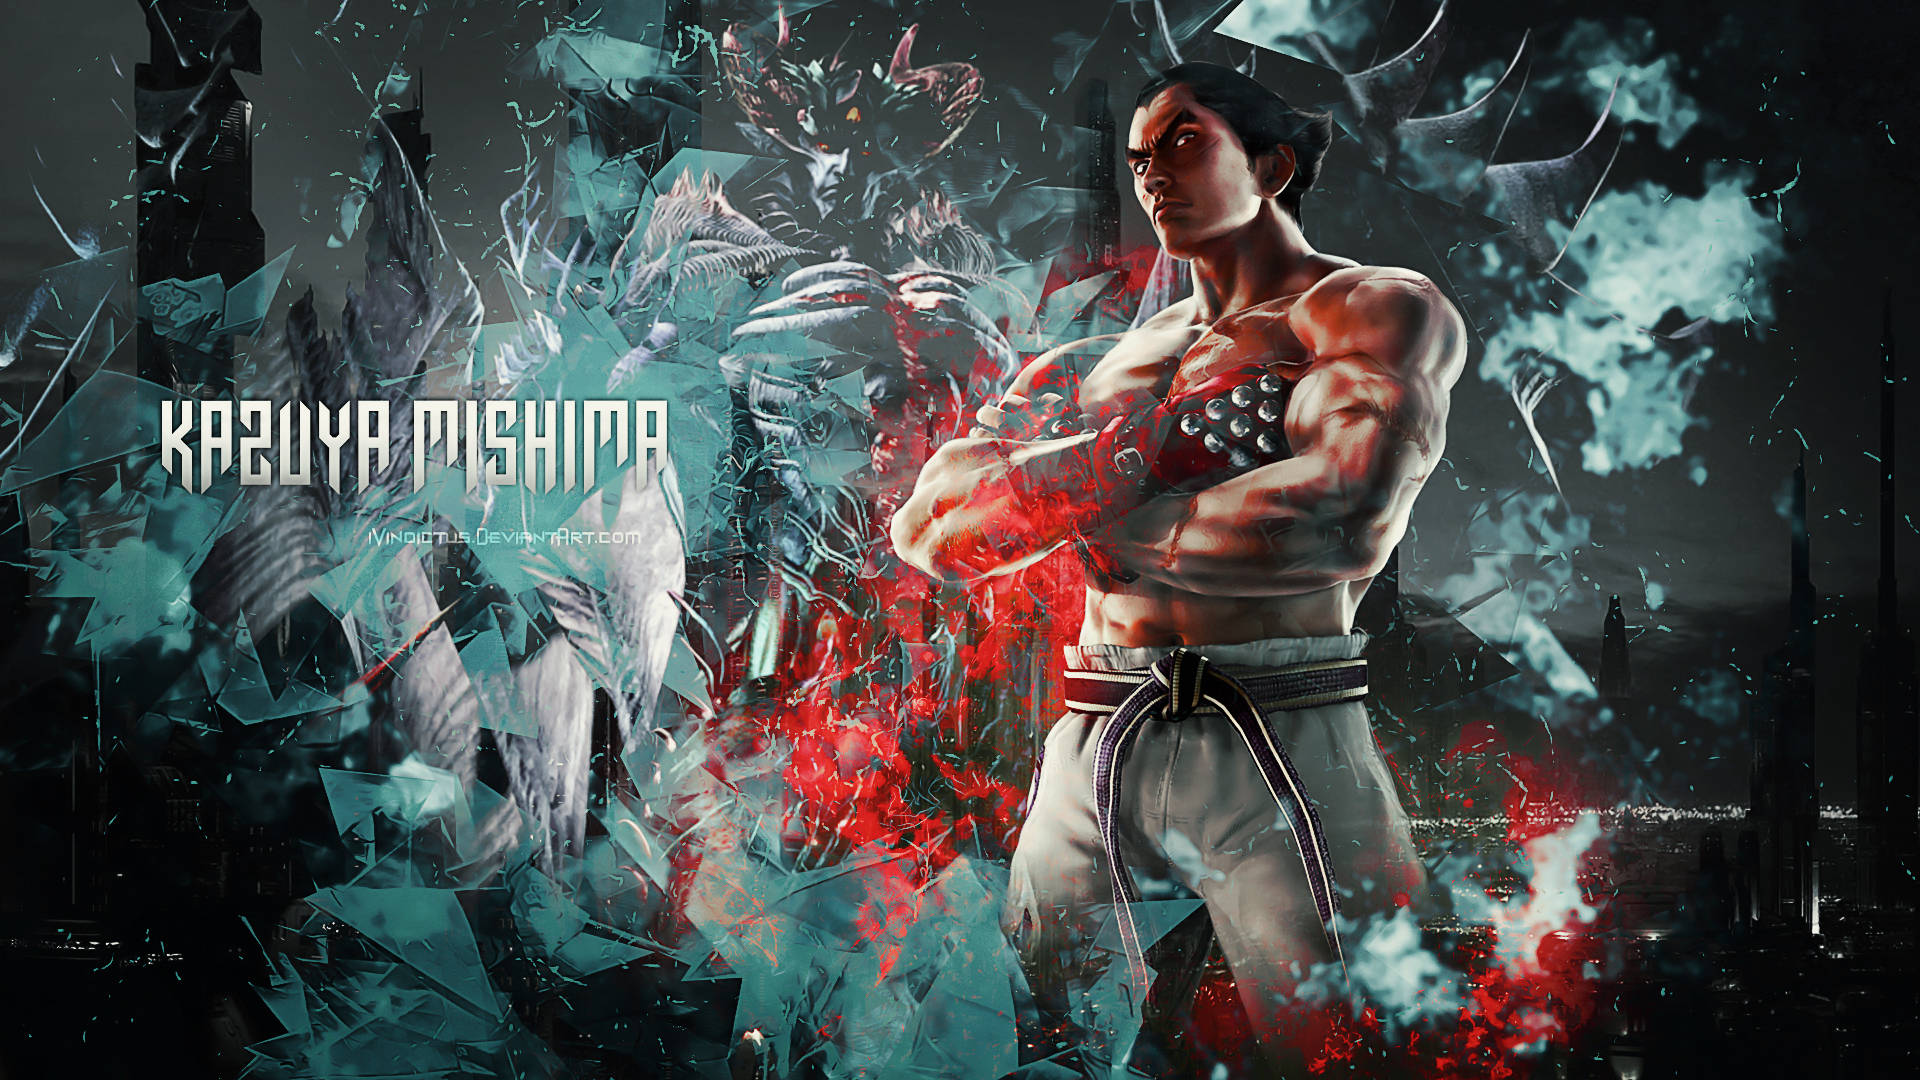 Kazuya Mishima Fan Art Cover Background